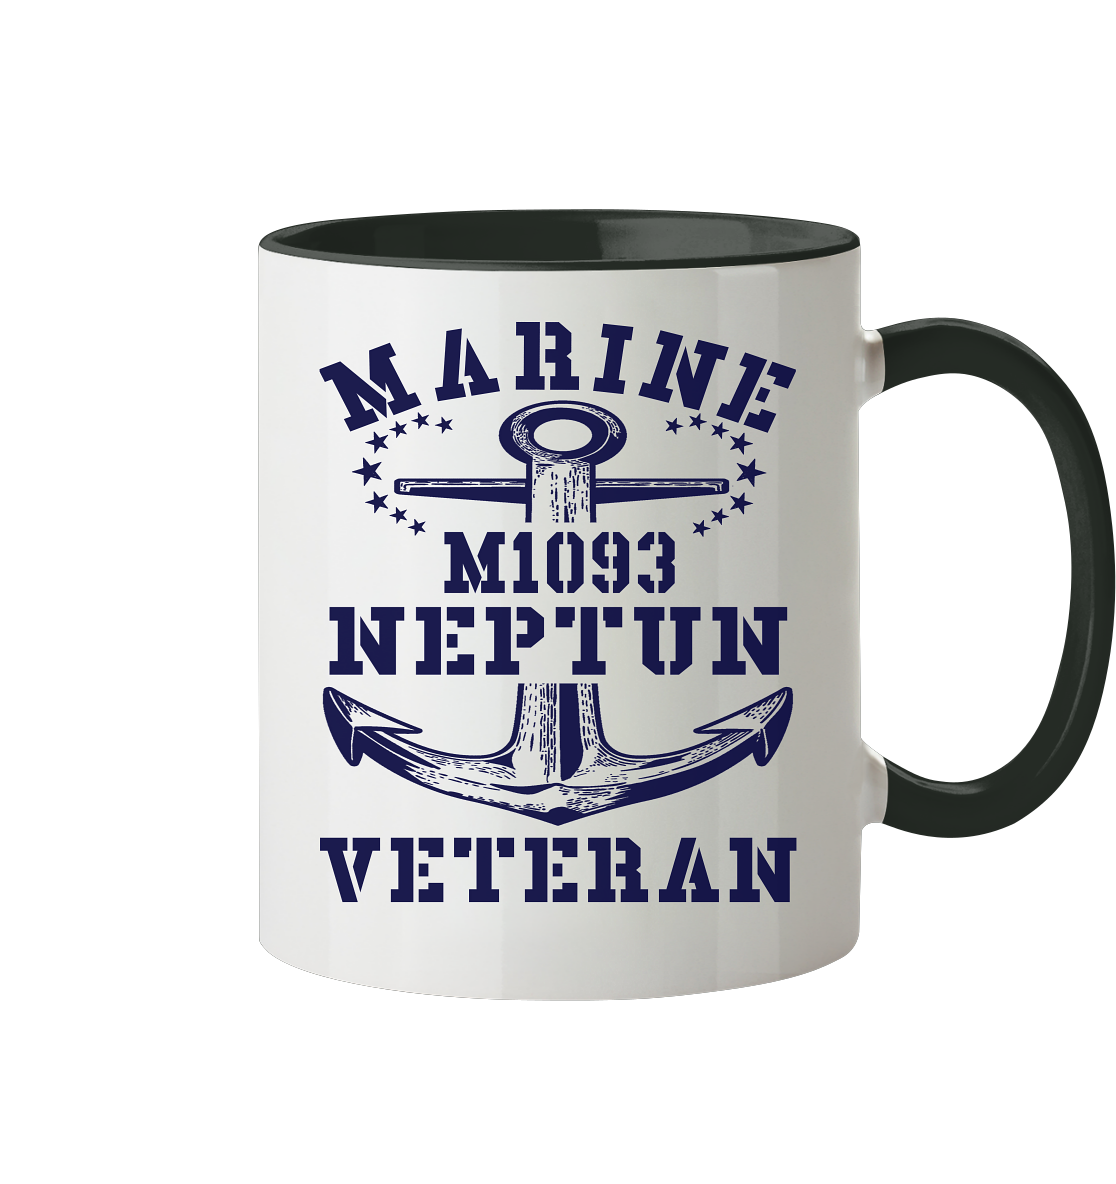 SM-Boot M1093 NEPTUN Marine Veteran  - Tasse zweifarbig